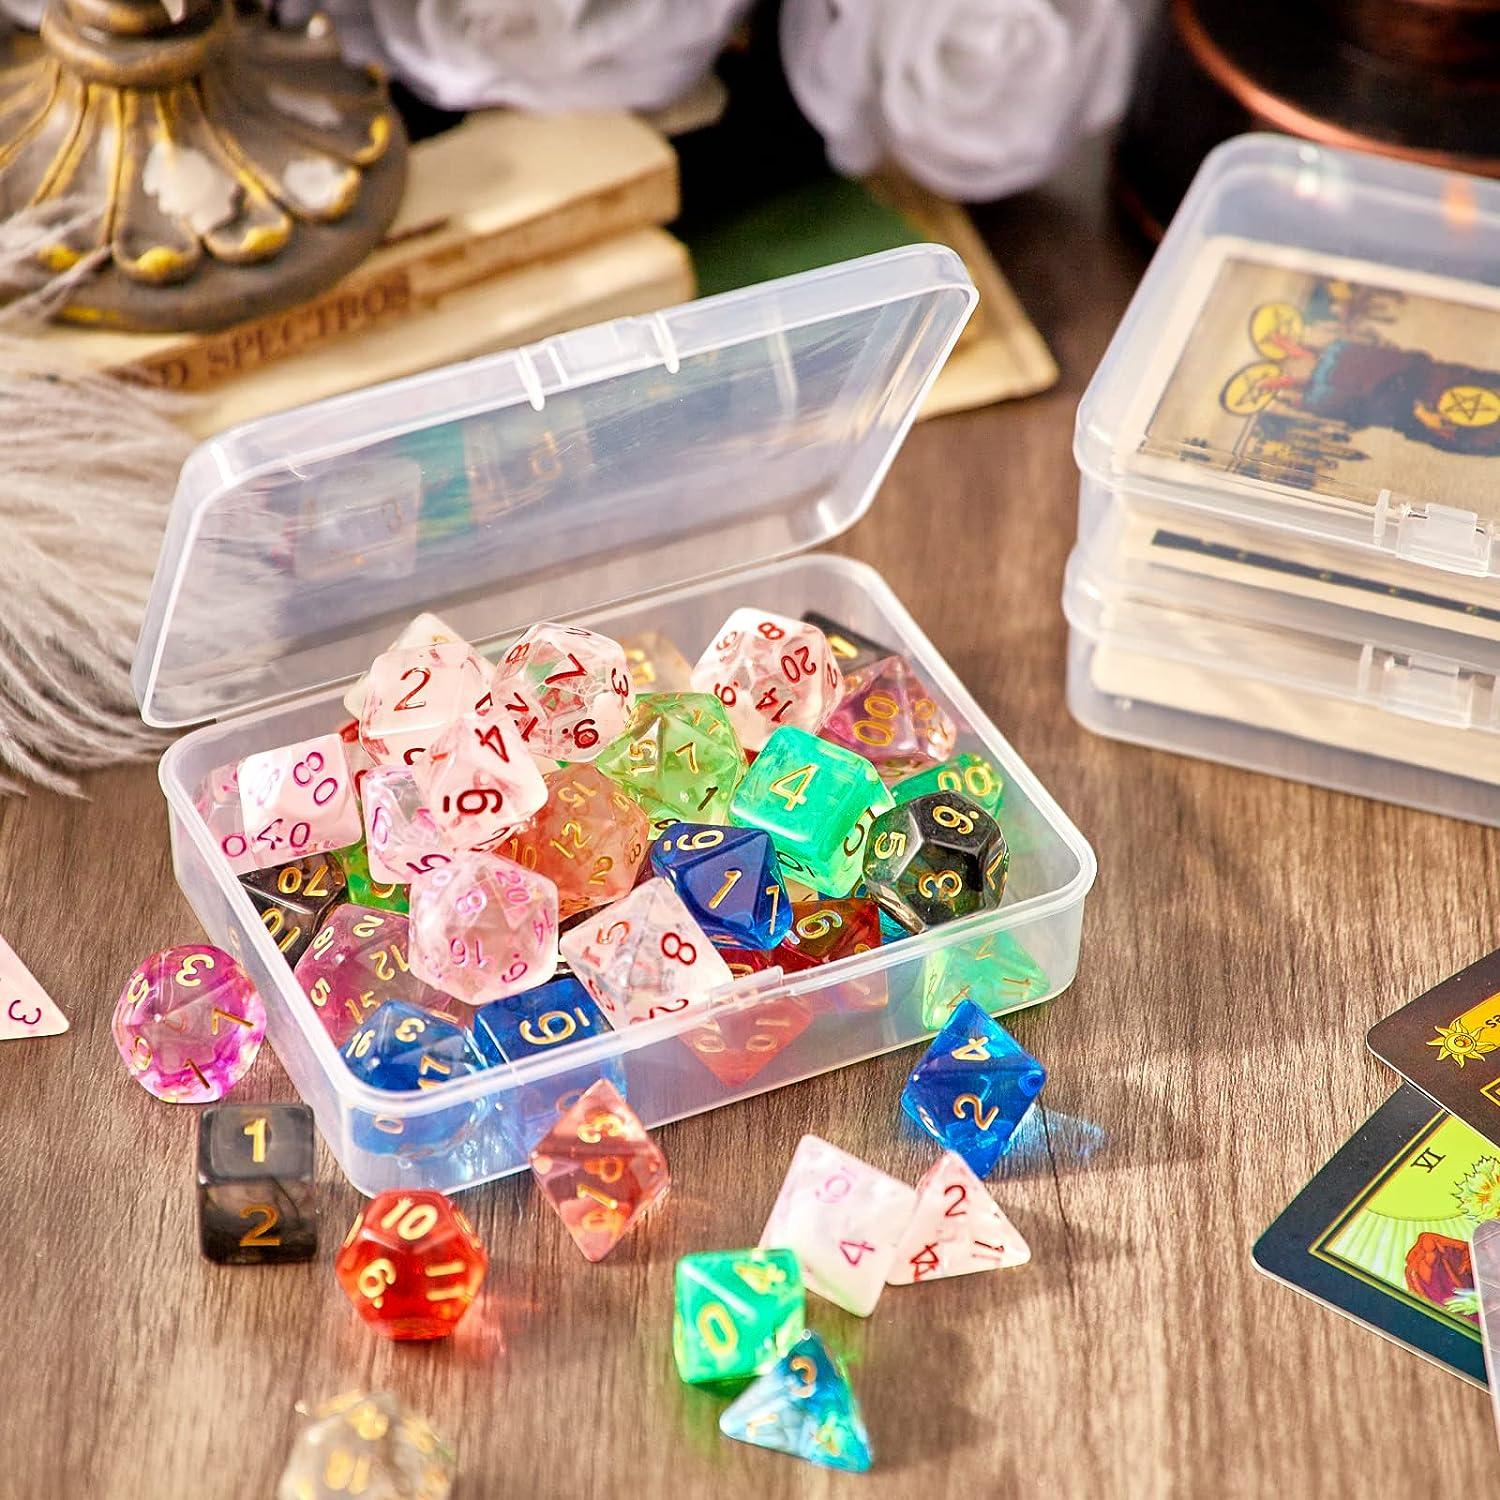 10 Pcs Clear Small Plastic Storage Box Jewelry Beads Organizer